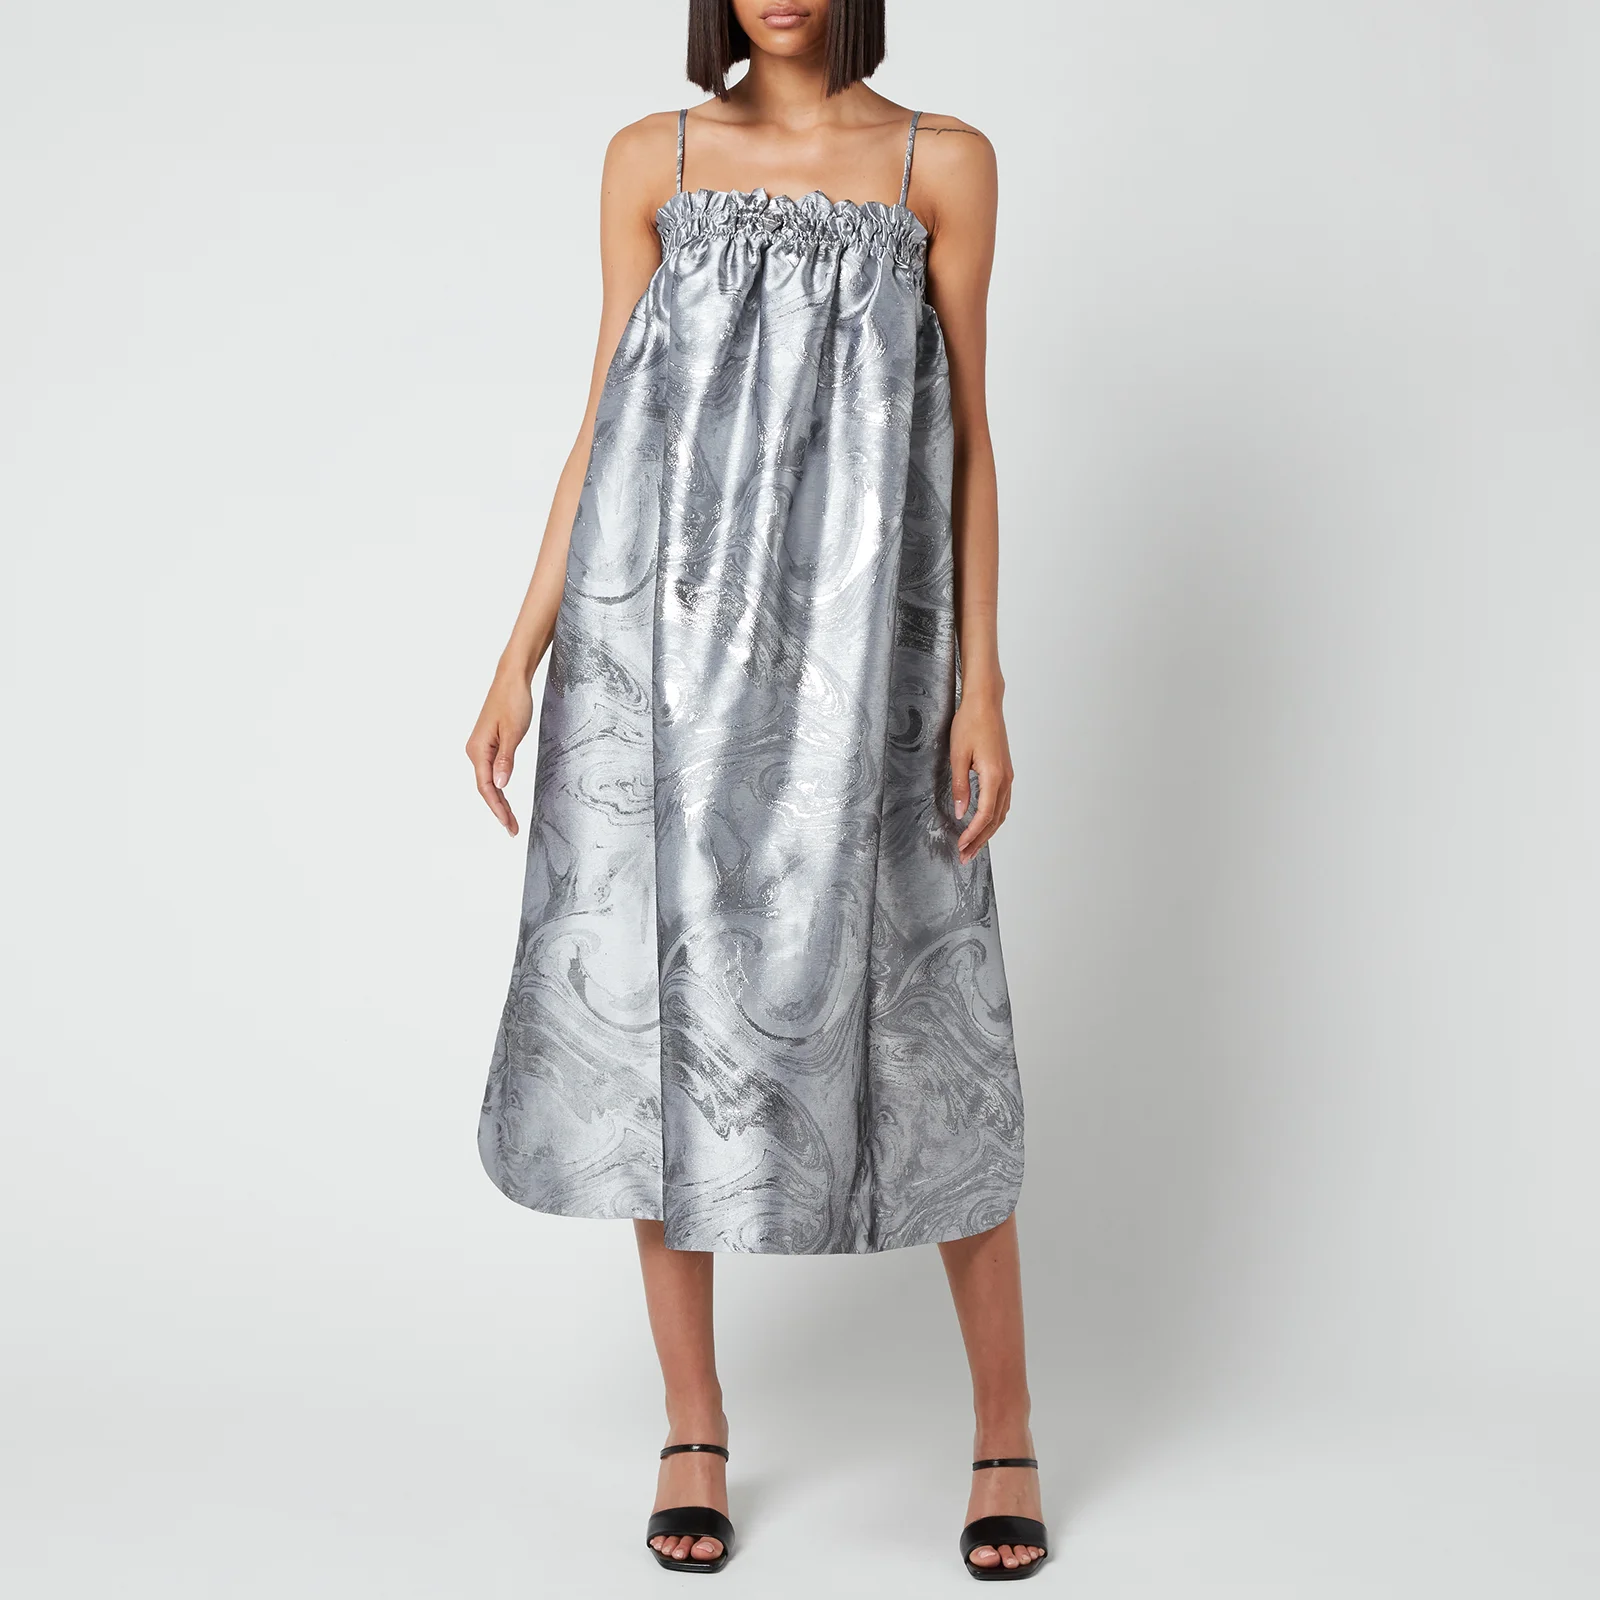 Ganni Women's Shiny Jacquard Strap Dress - Silver Image 1